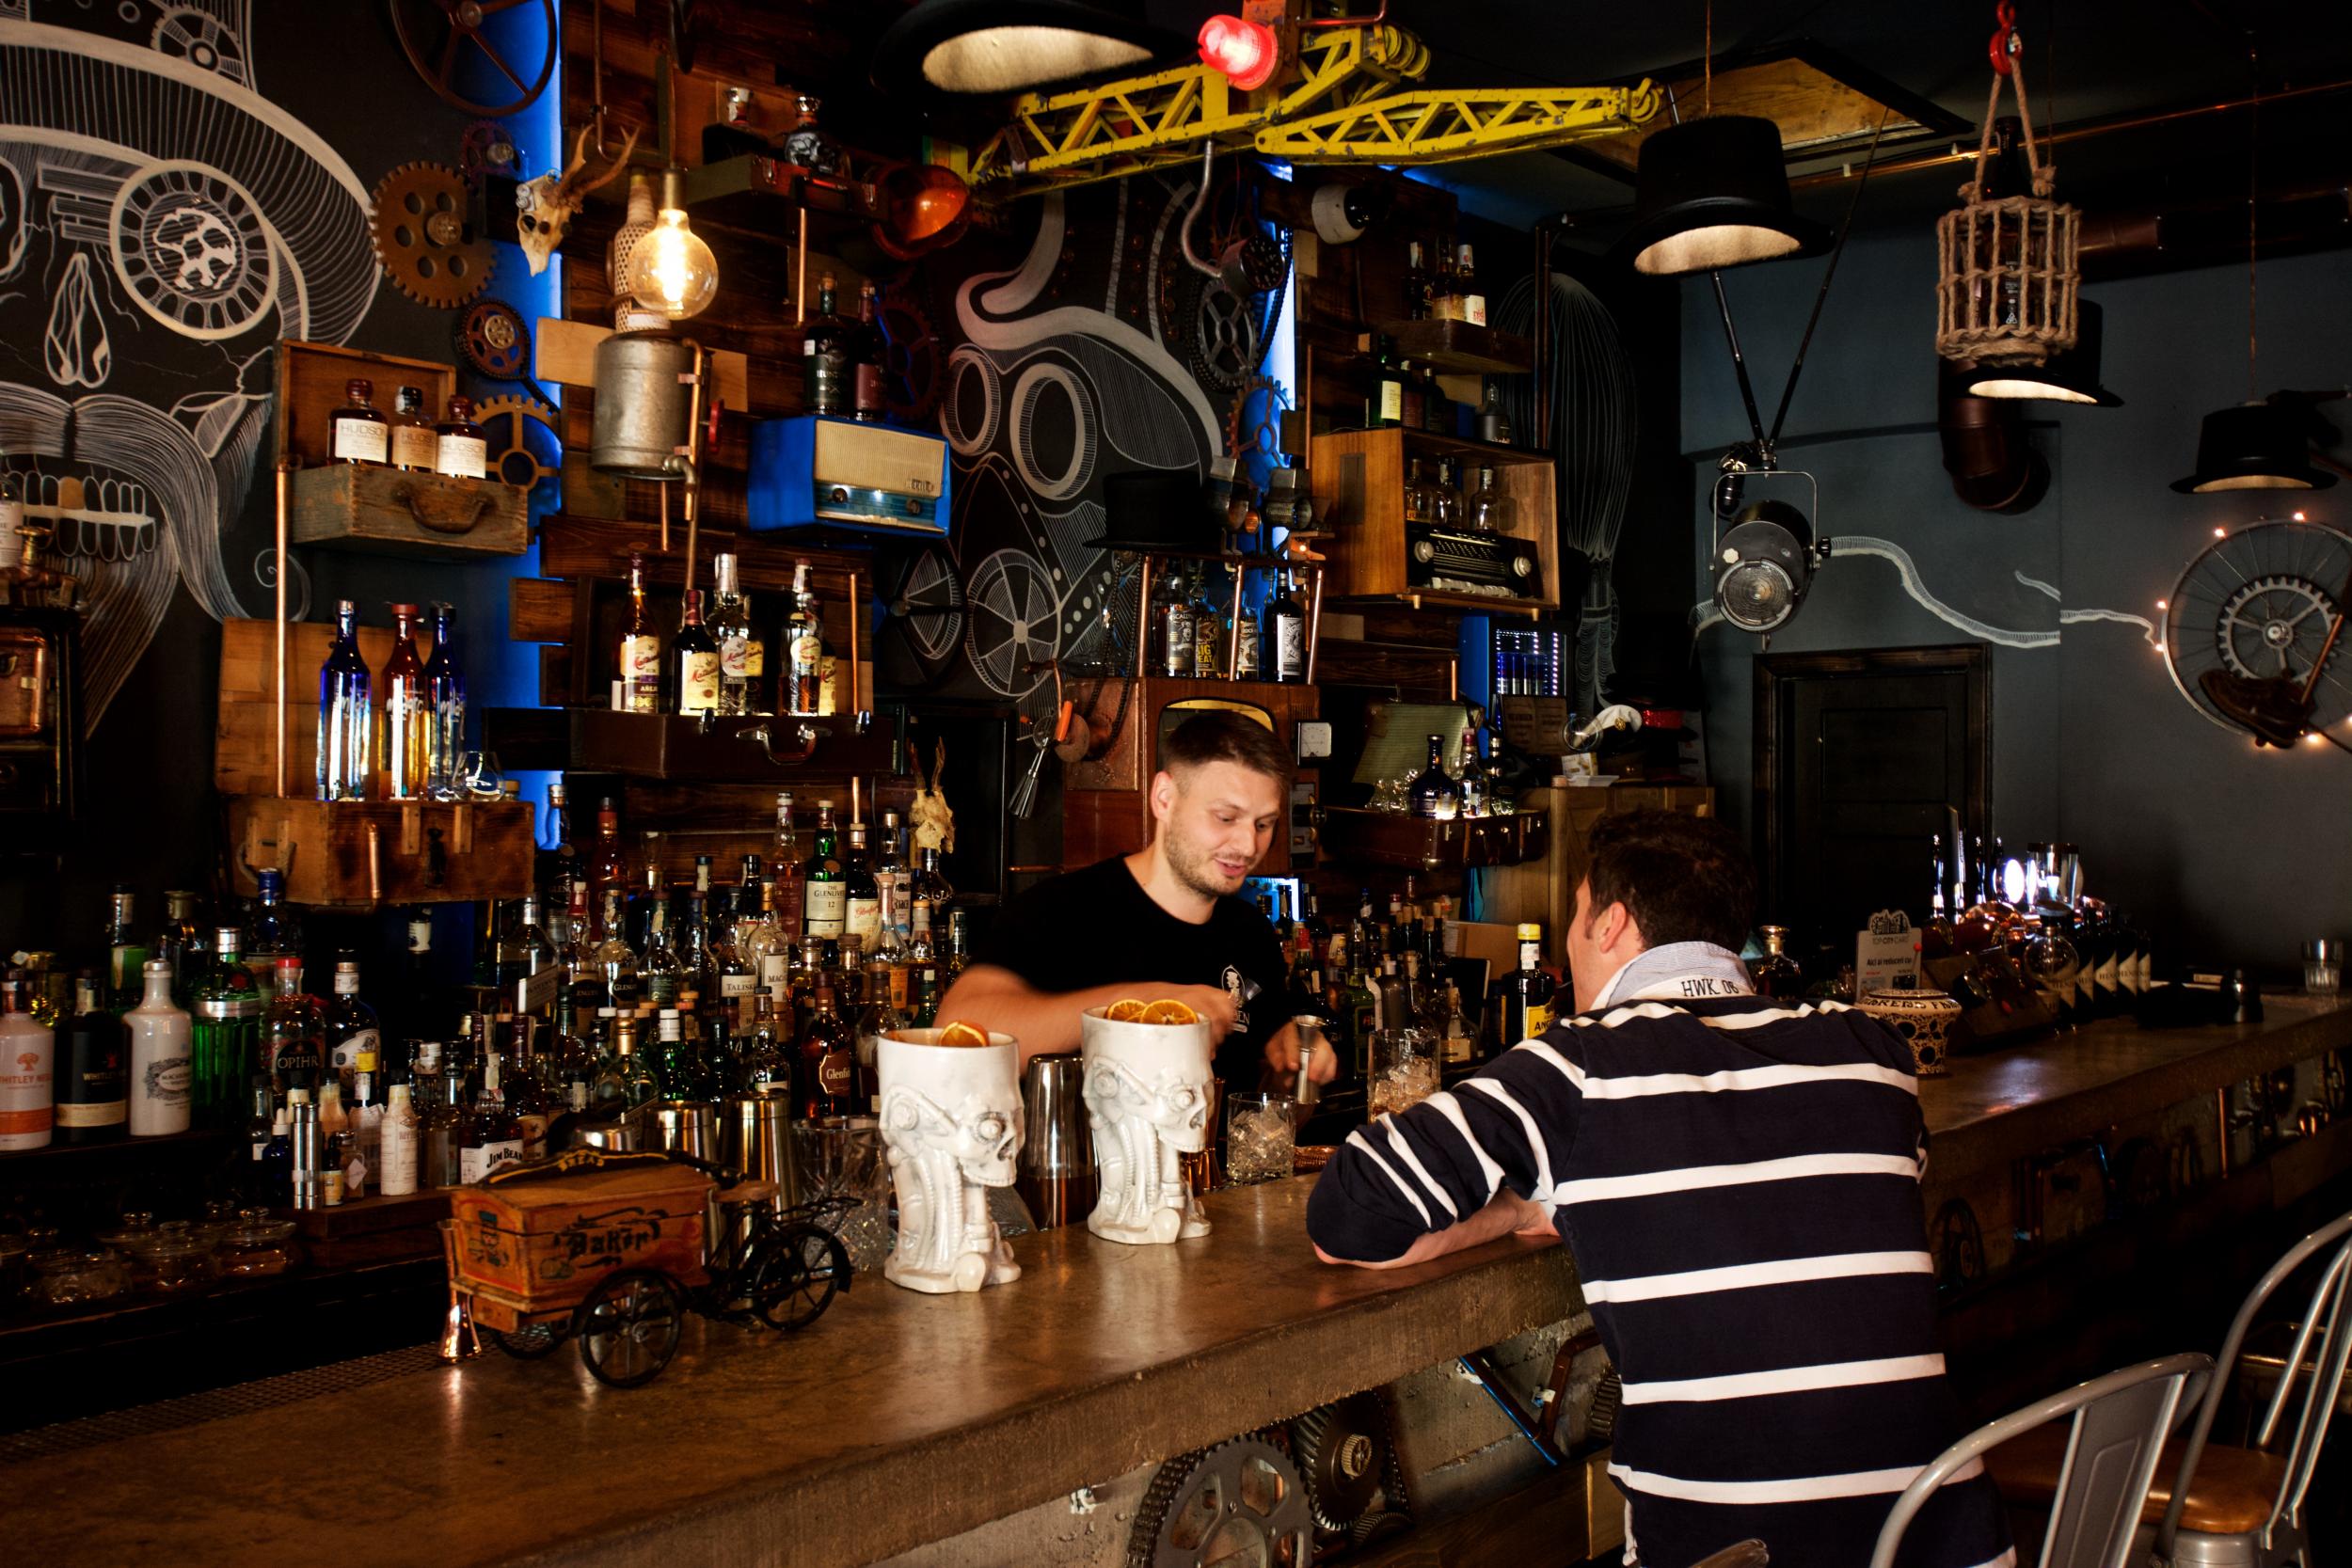 Steampunk bar, Joben, was inspired by Q Caffe